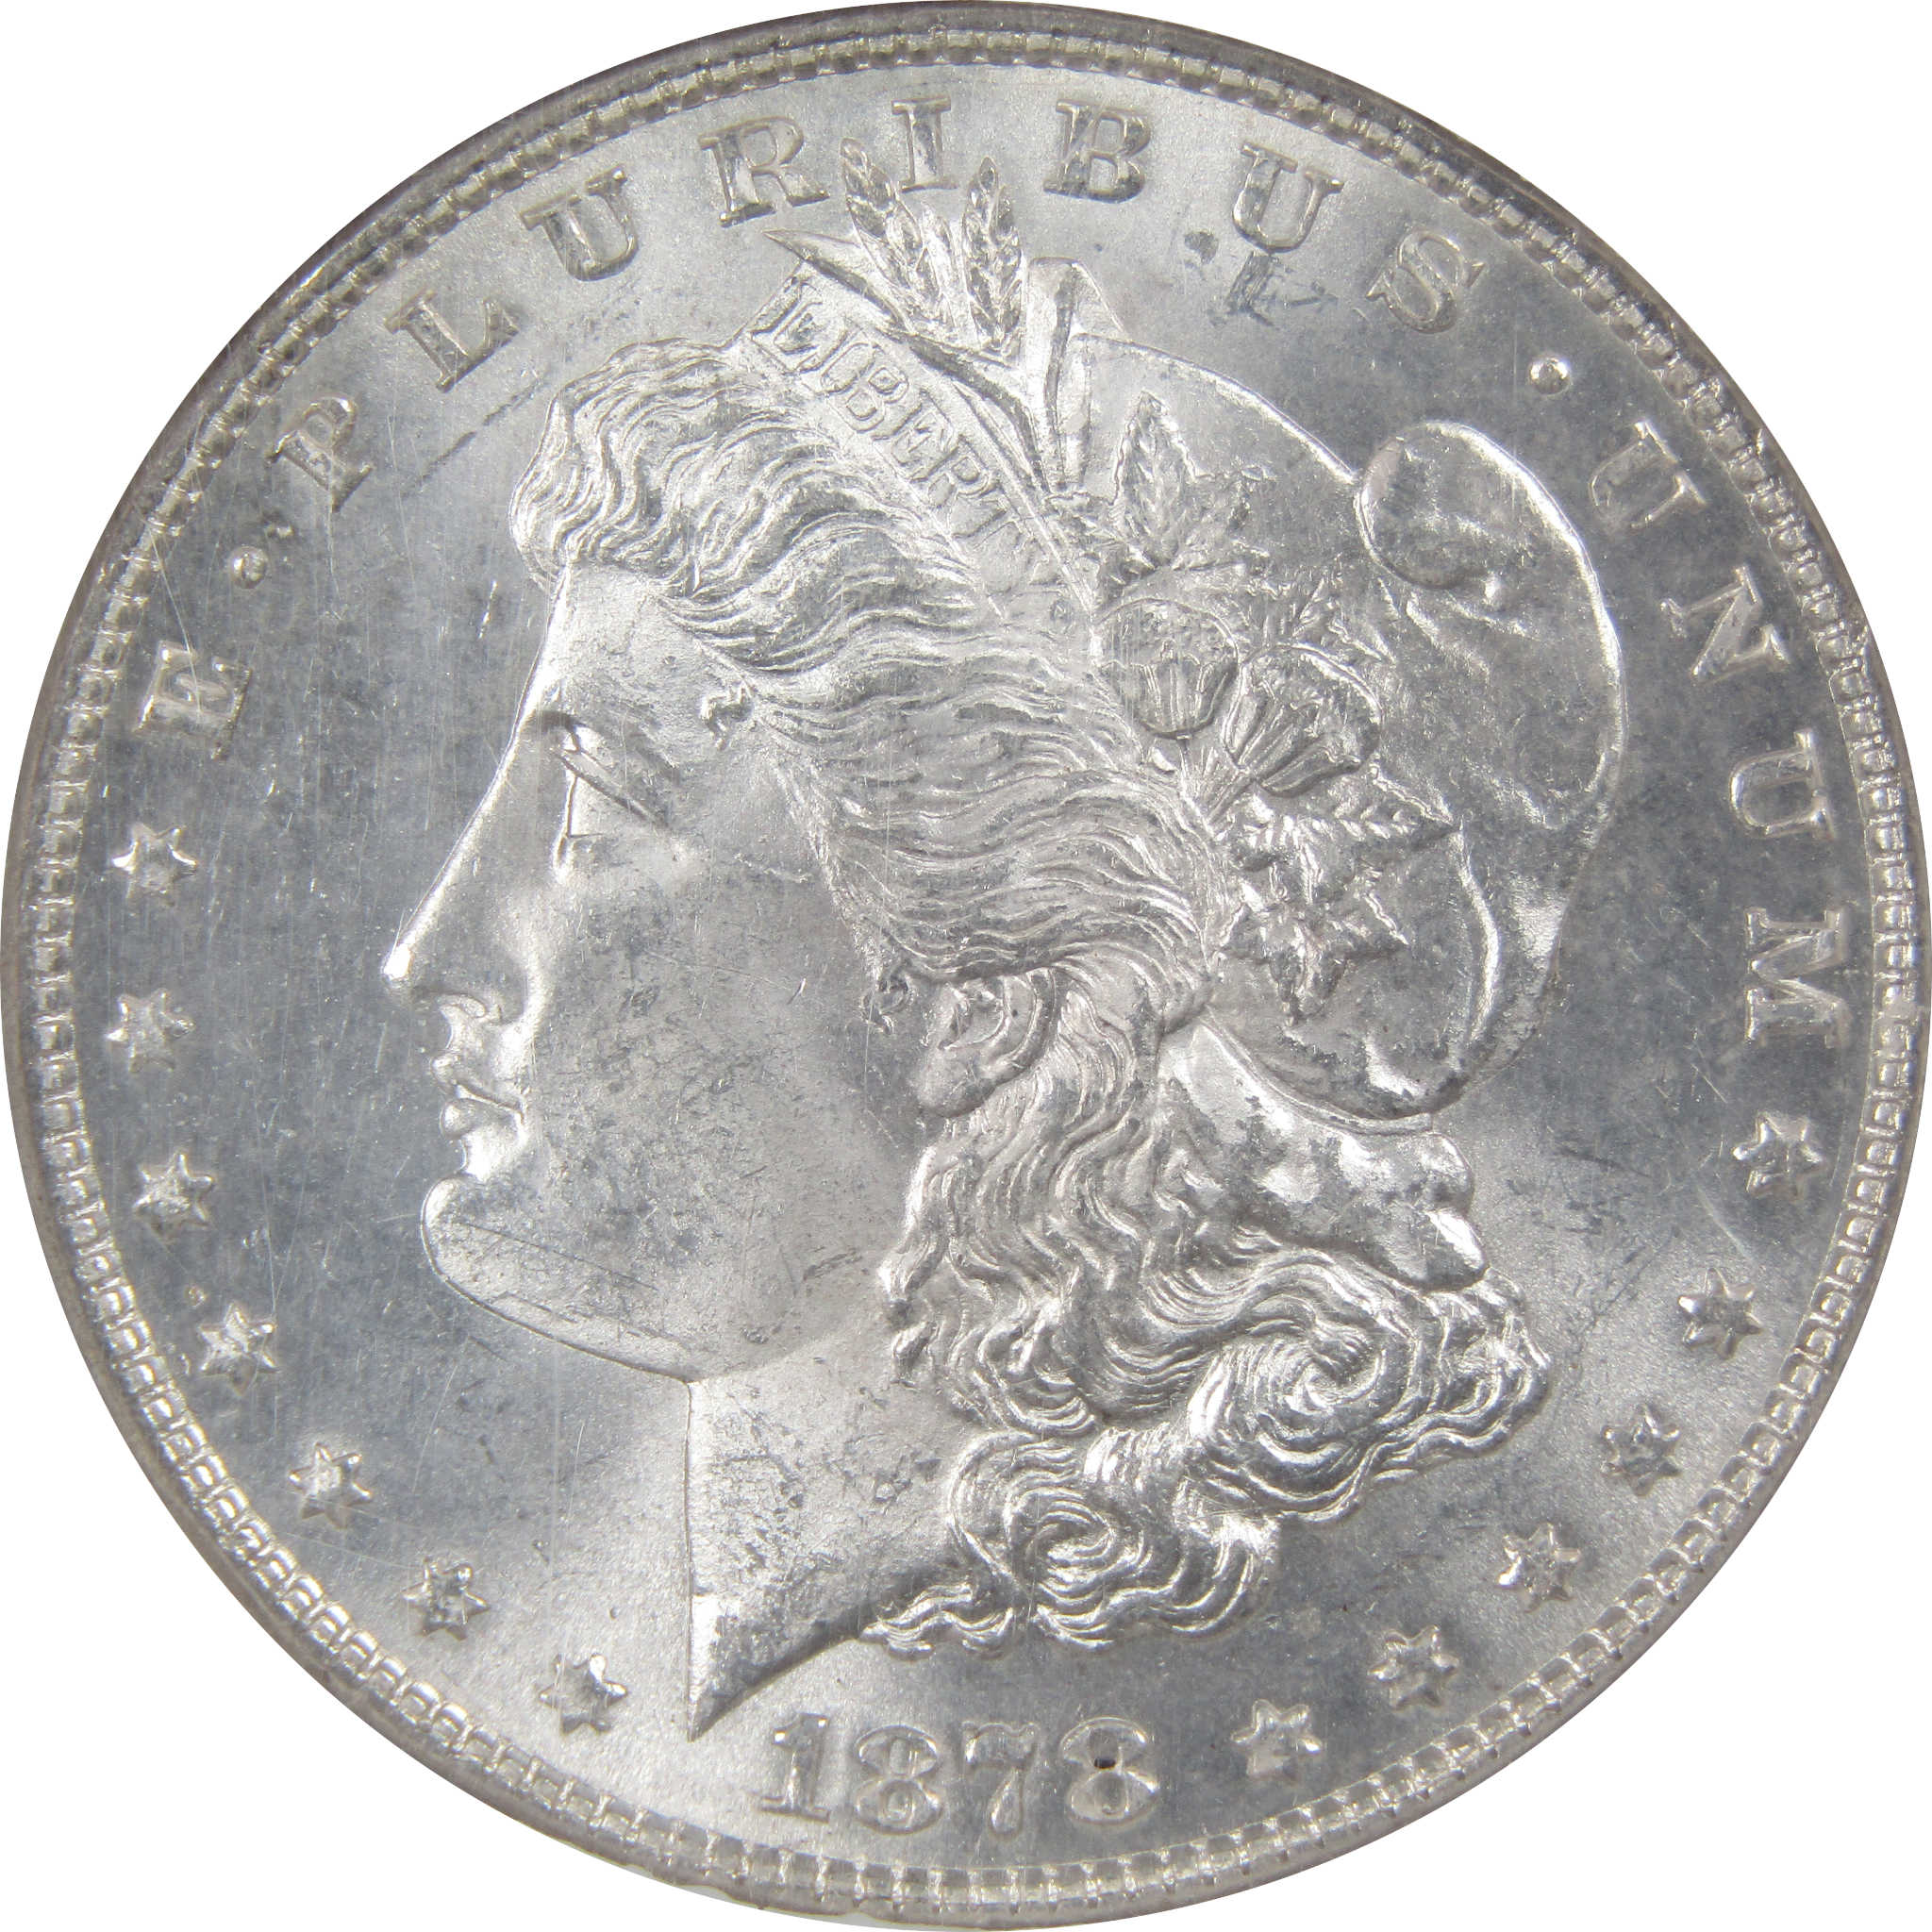 1878 7TF Rev 79 Morgan Dollar MS 63 NGC Silver SKU:IPC5893 - Morgan coin - Morgan silver dollar - Morgan silver dollar for sale - Profile Coins &amp; Collectibles